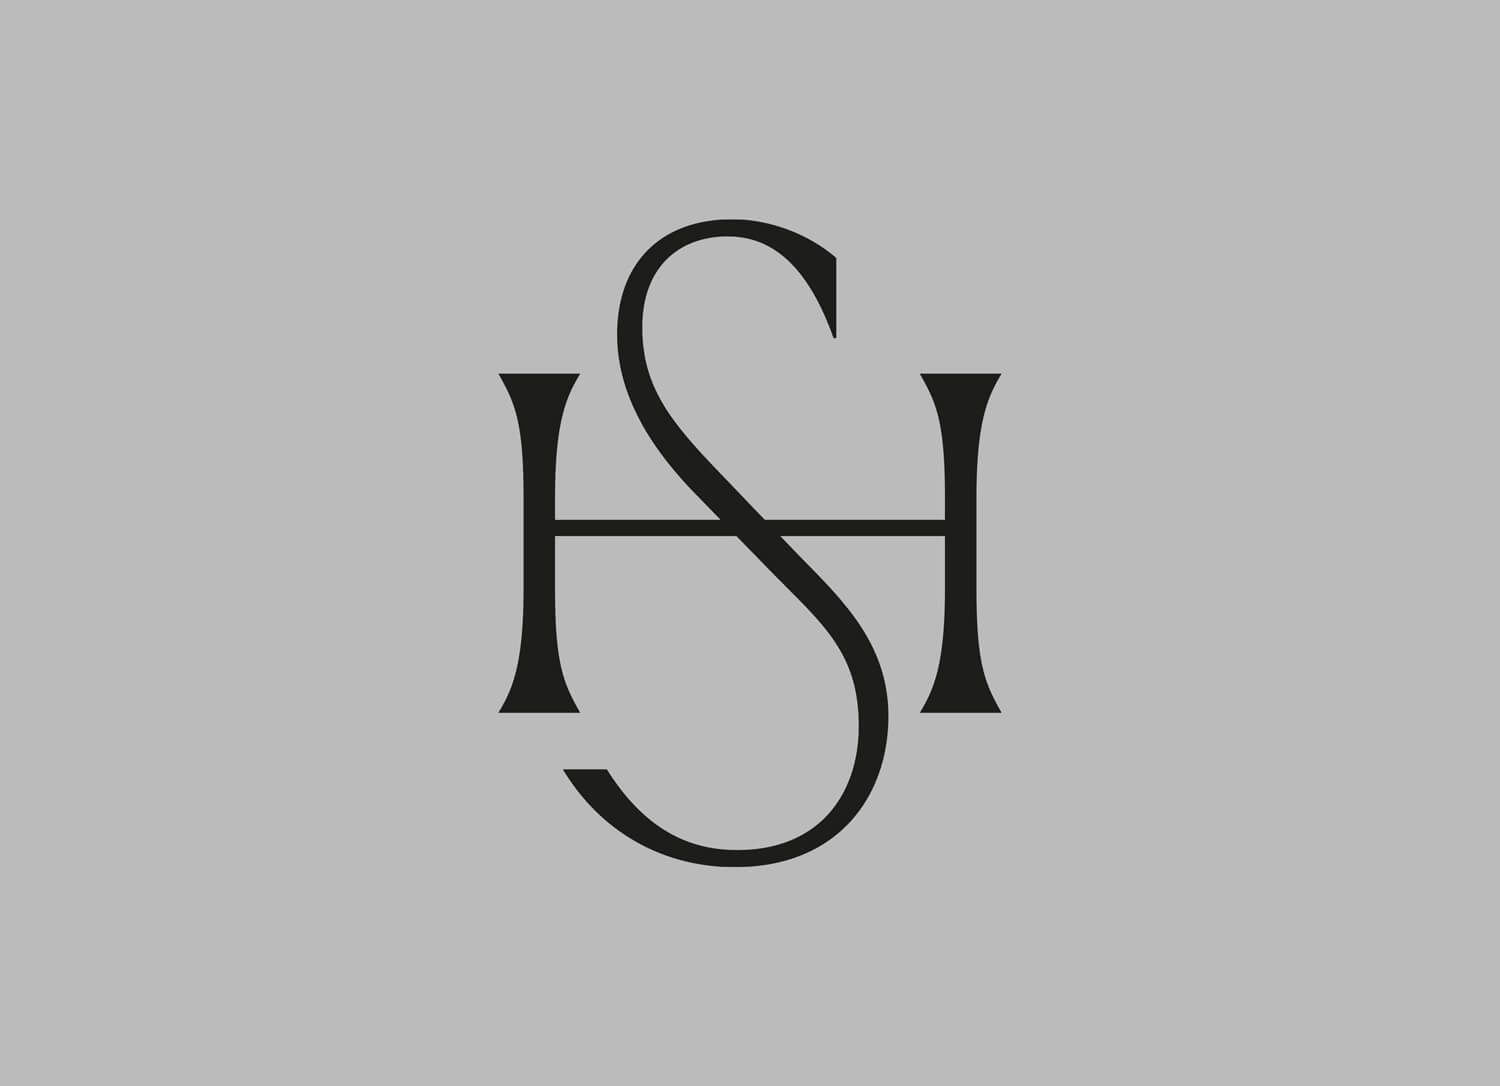 SH Logomark by Imaginary Friends